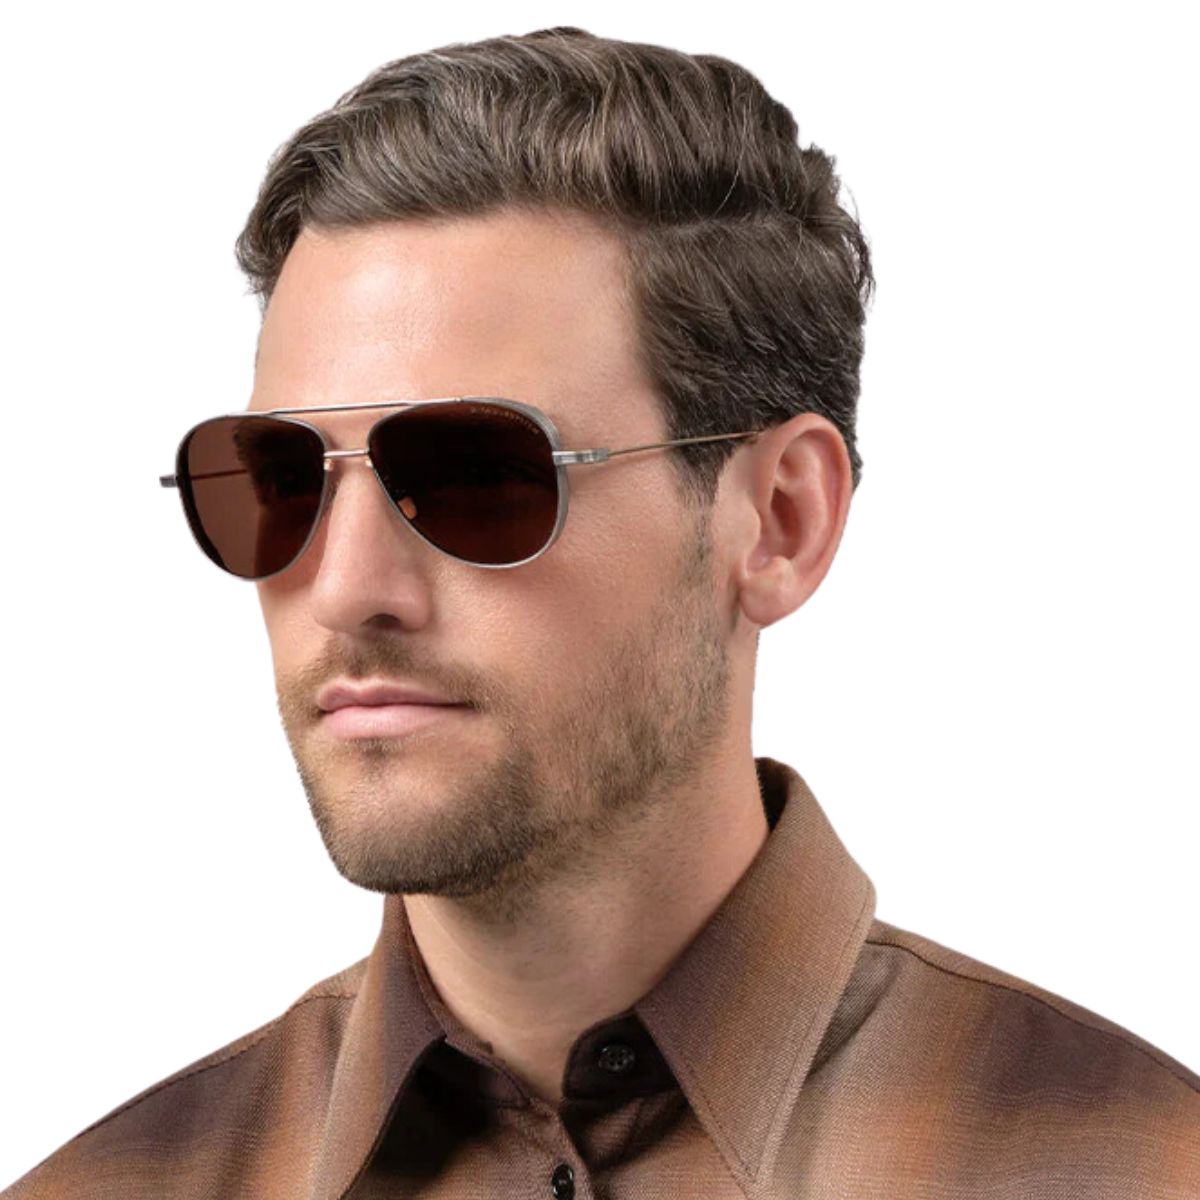 "Buy Stylish Aviator With Anti-Reflection Sunglasses For Men's | Optorium"